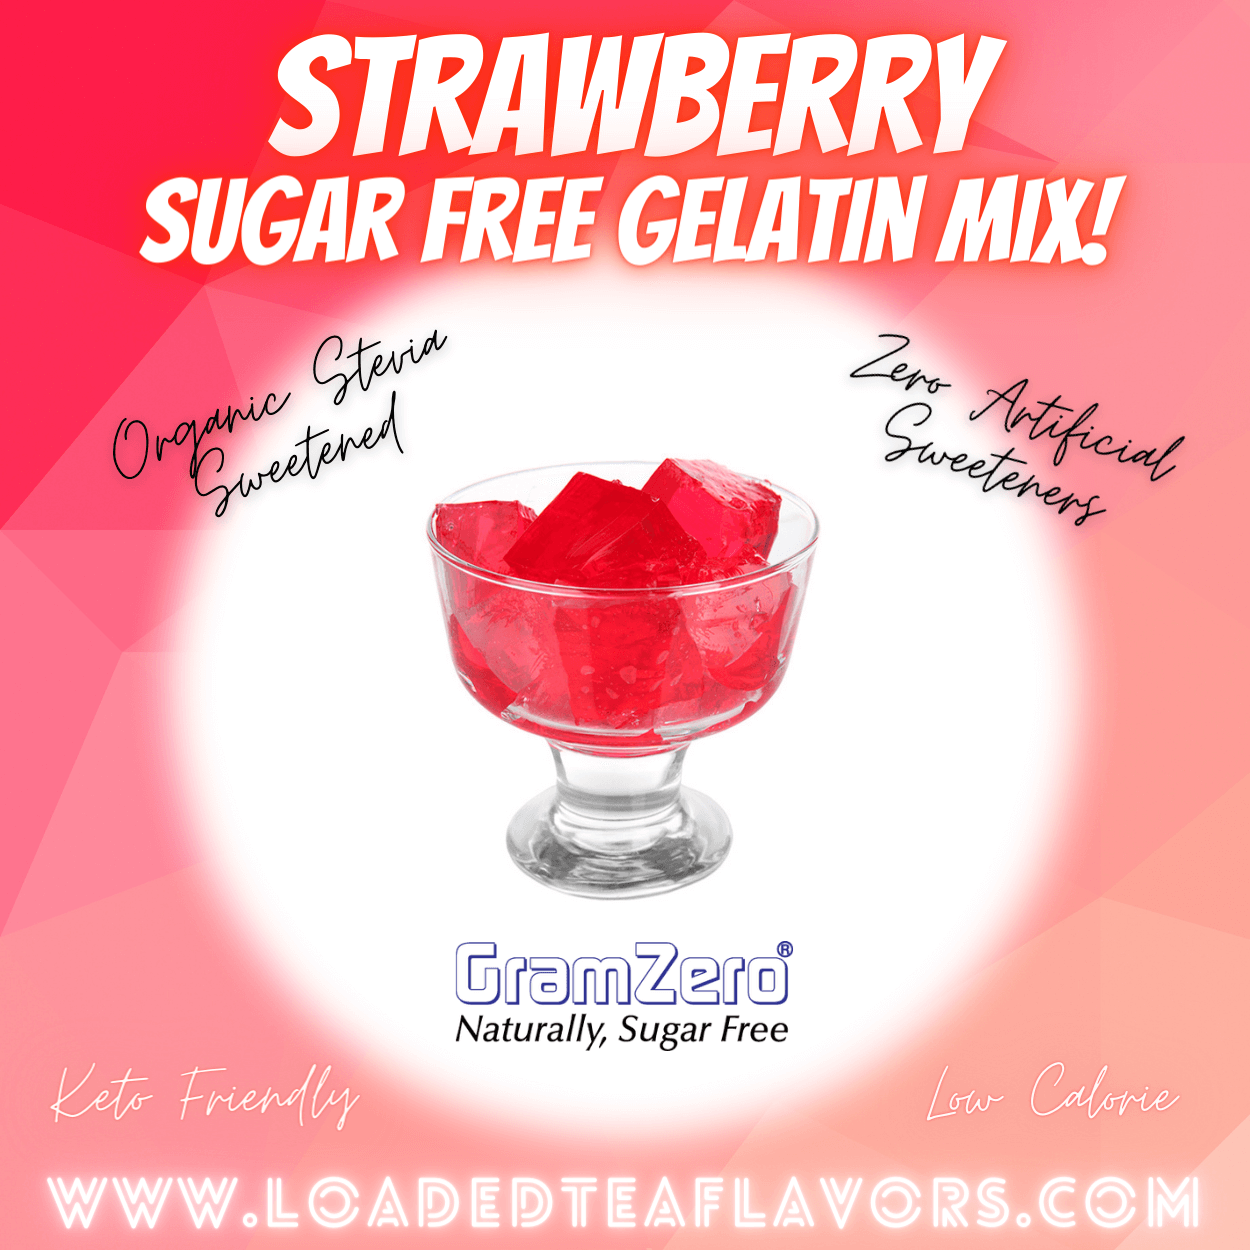 Gramzero Strawberry Sugar Free Gelatin Mix Stevia Sweetened Low Calorie Keto Friendly